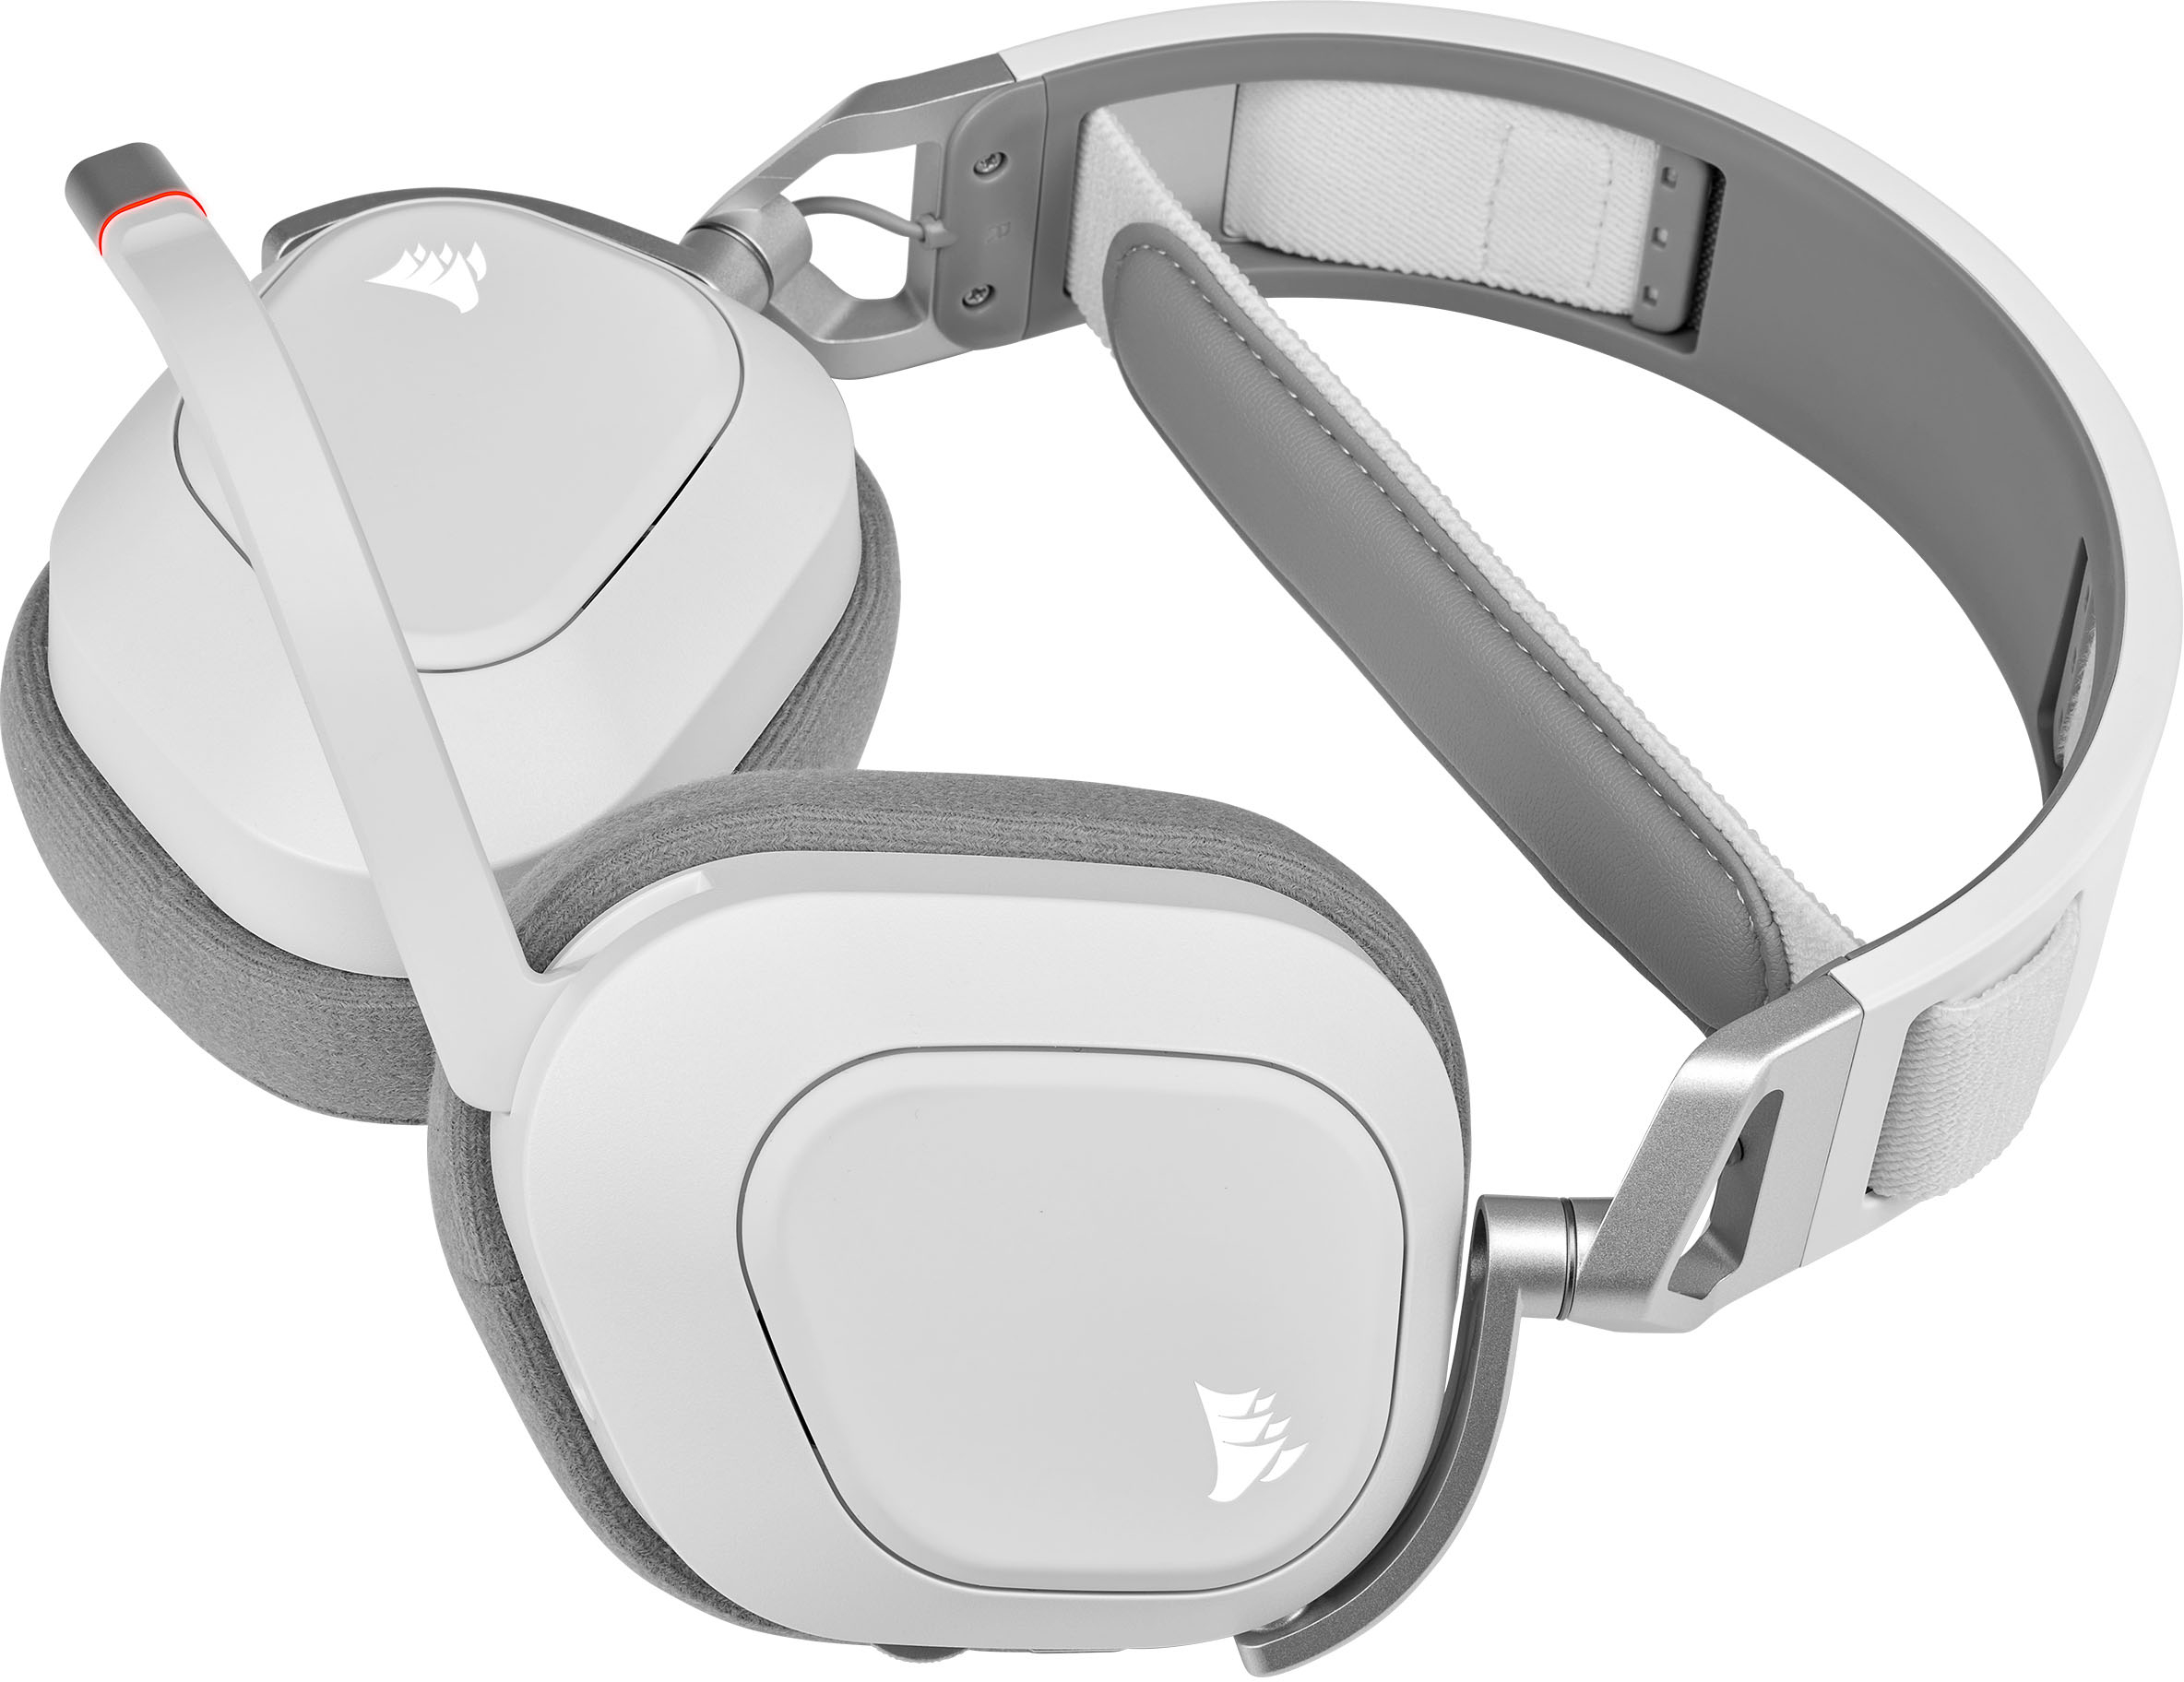 HS80 MAX WIRELESS Gaming Headset, White